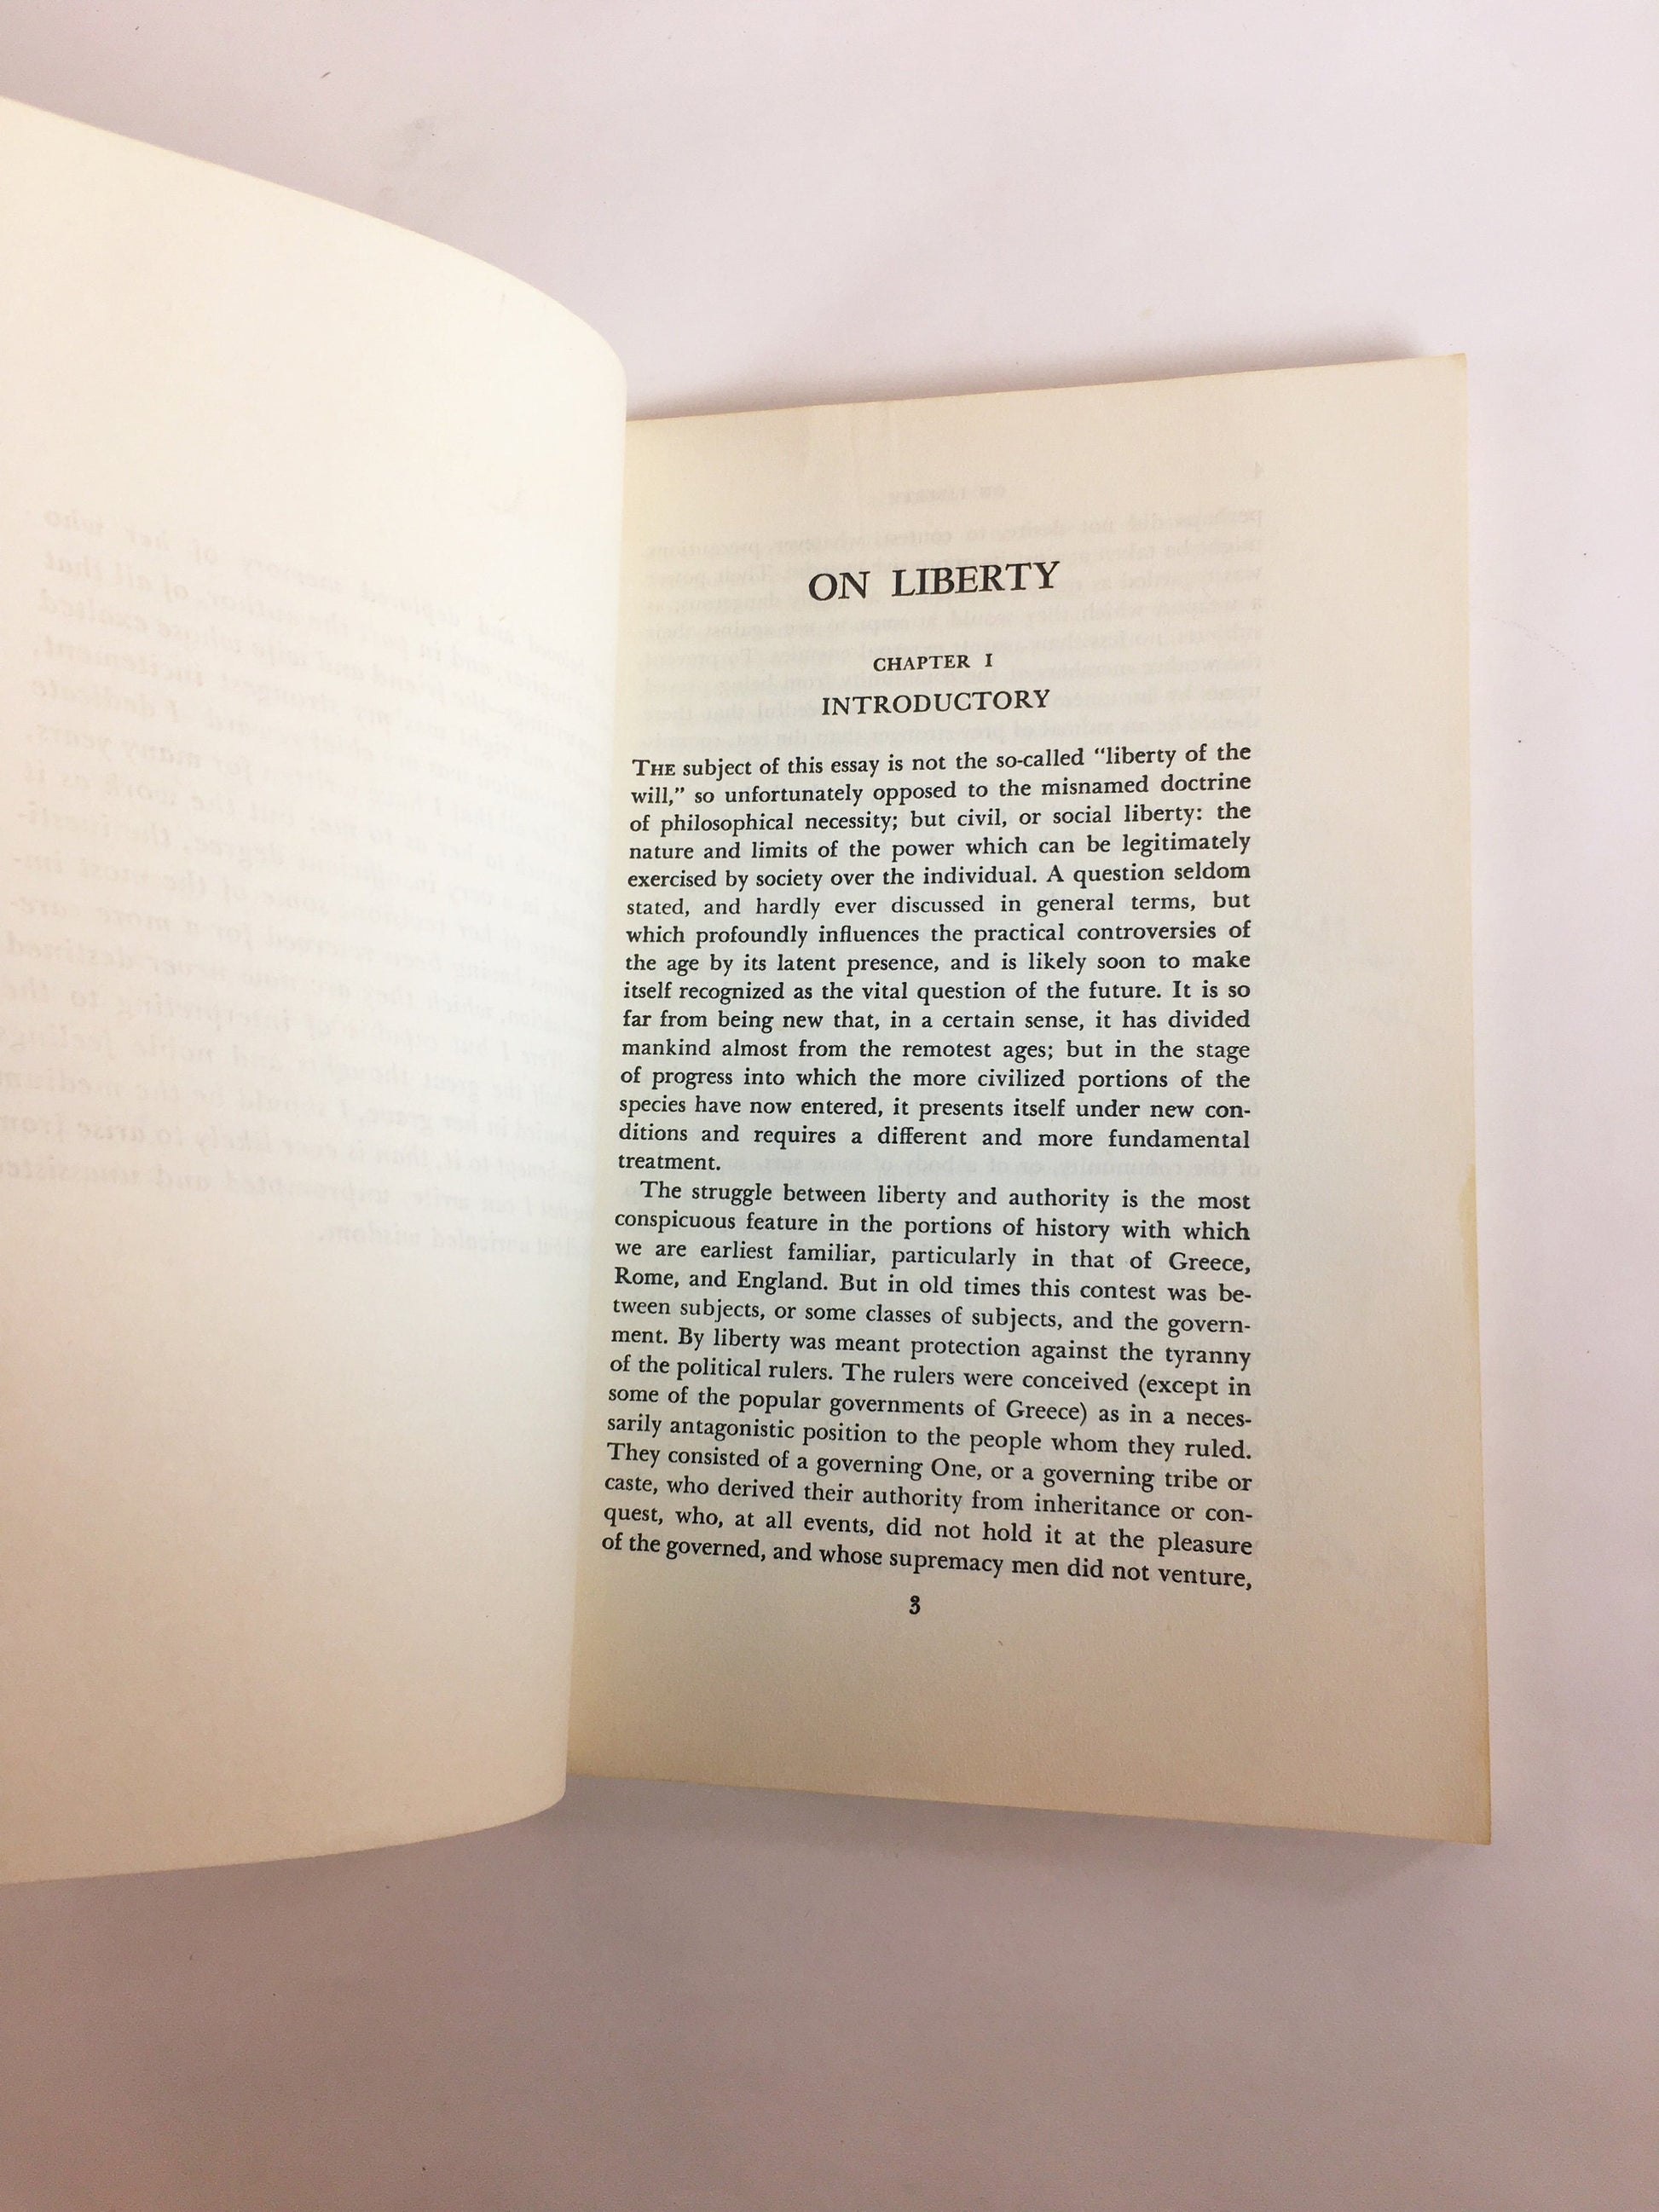 John Stuart Mills On Liberty Vintage paperback book circa 1956 Liberal Arts Press. Utilitarianism society and government philosophy.